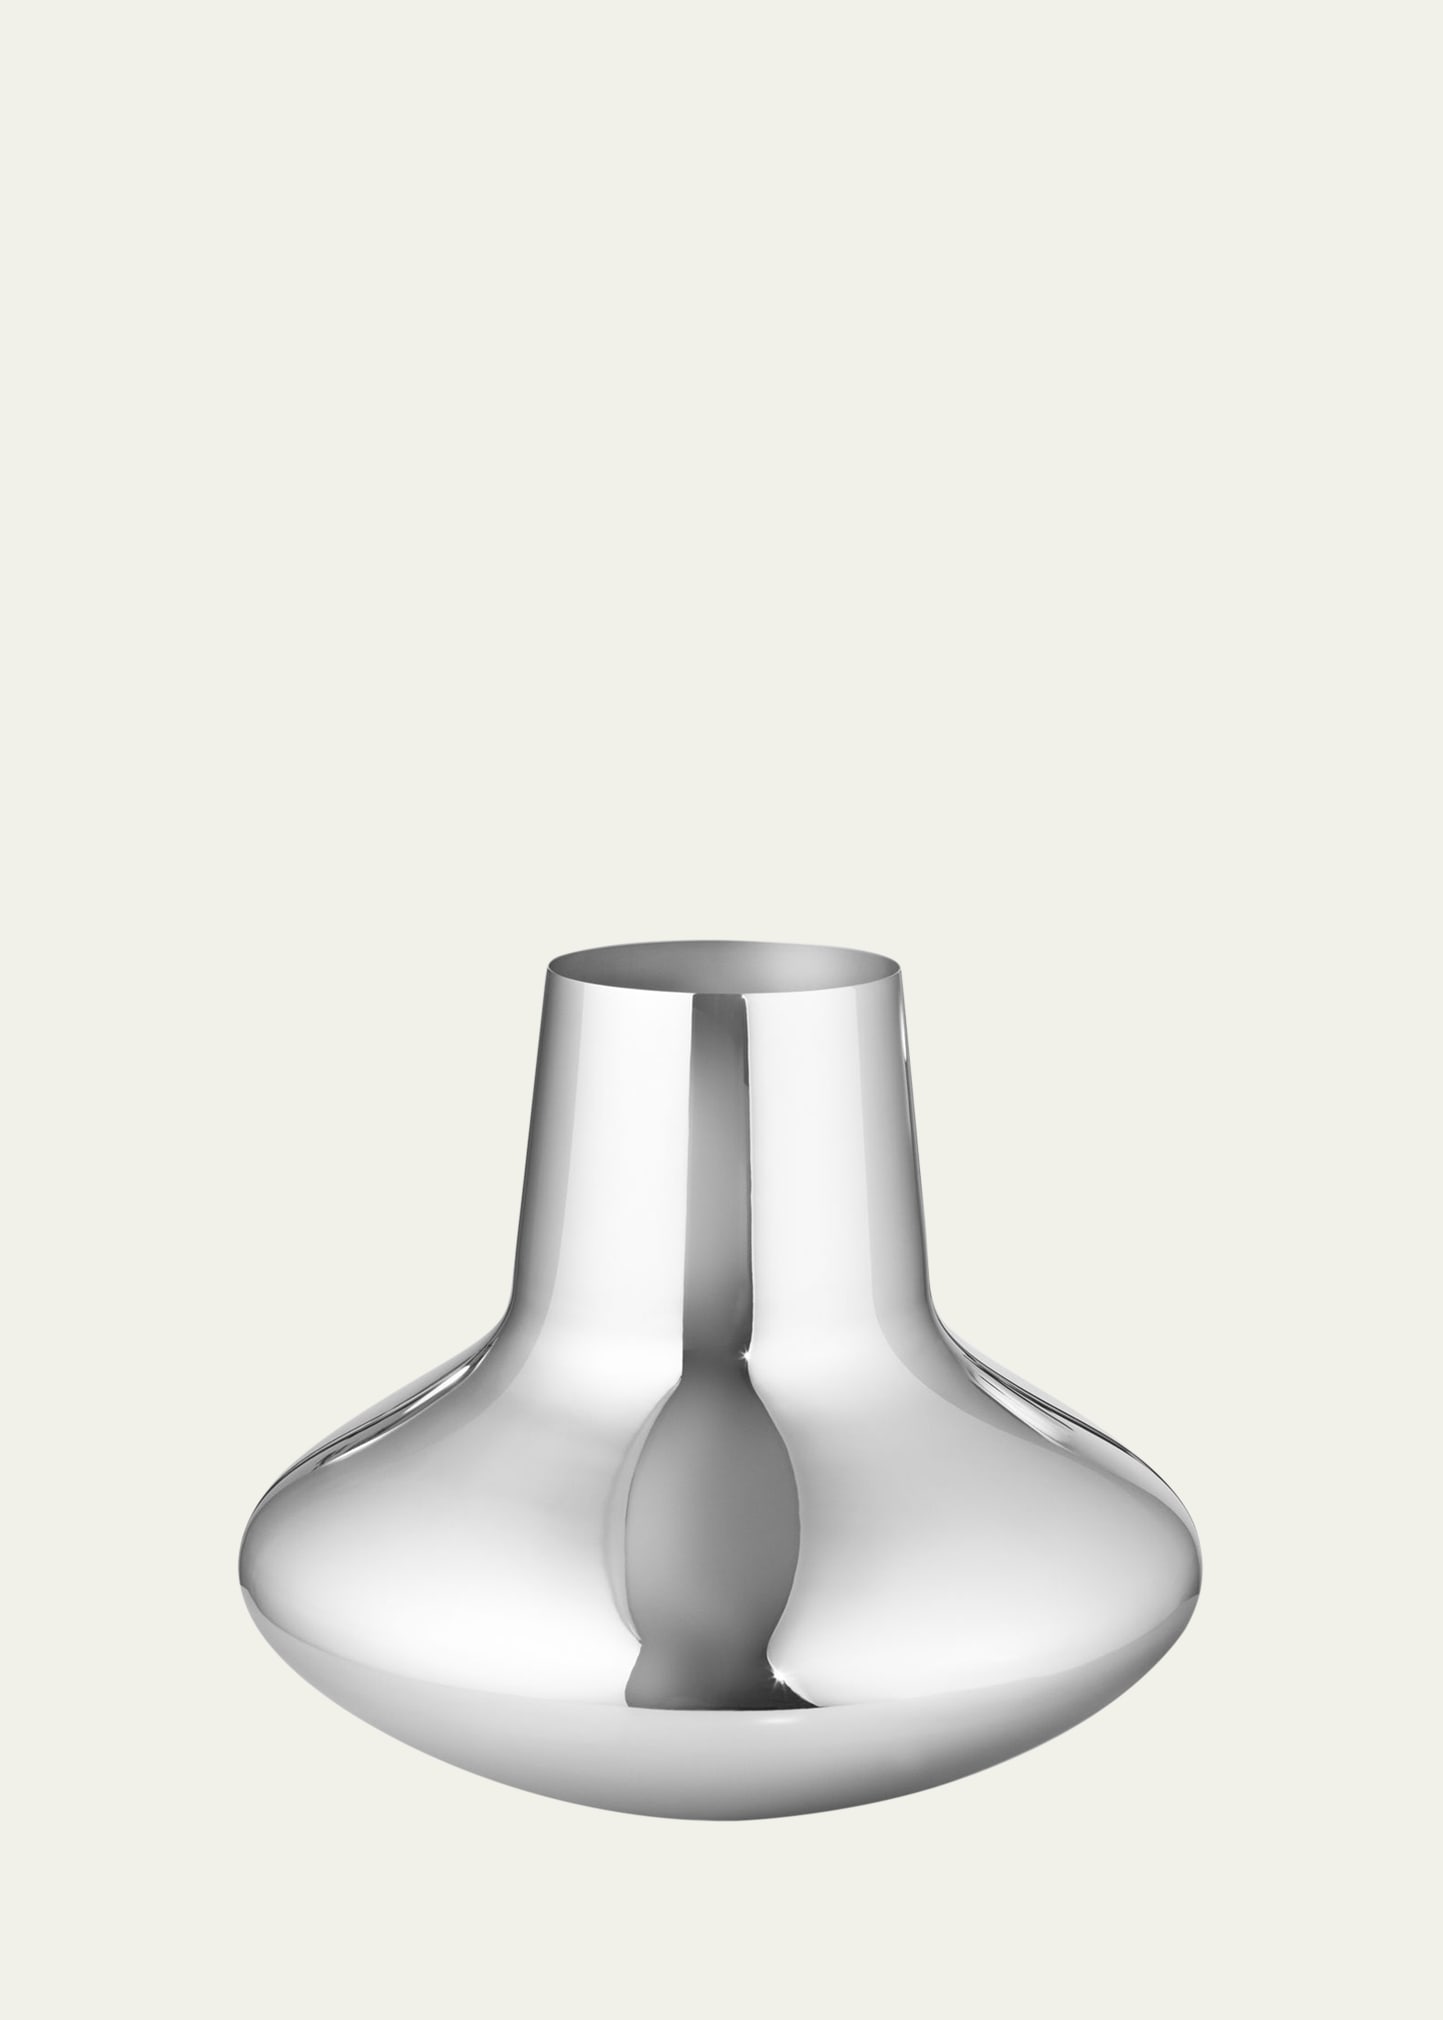 Stainless Steel Vase, 10.6"T